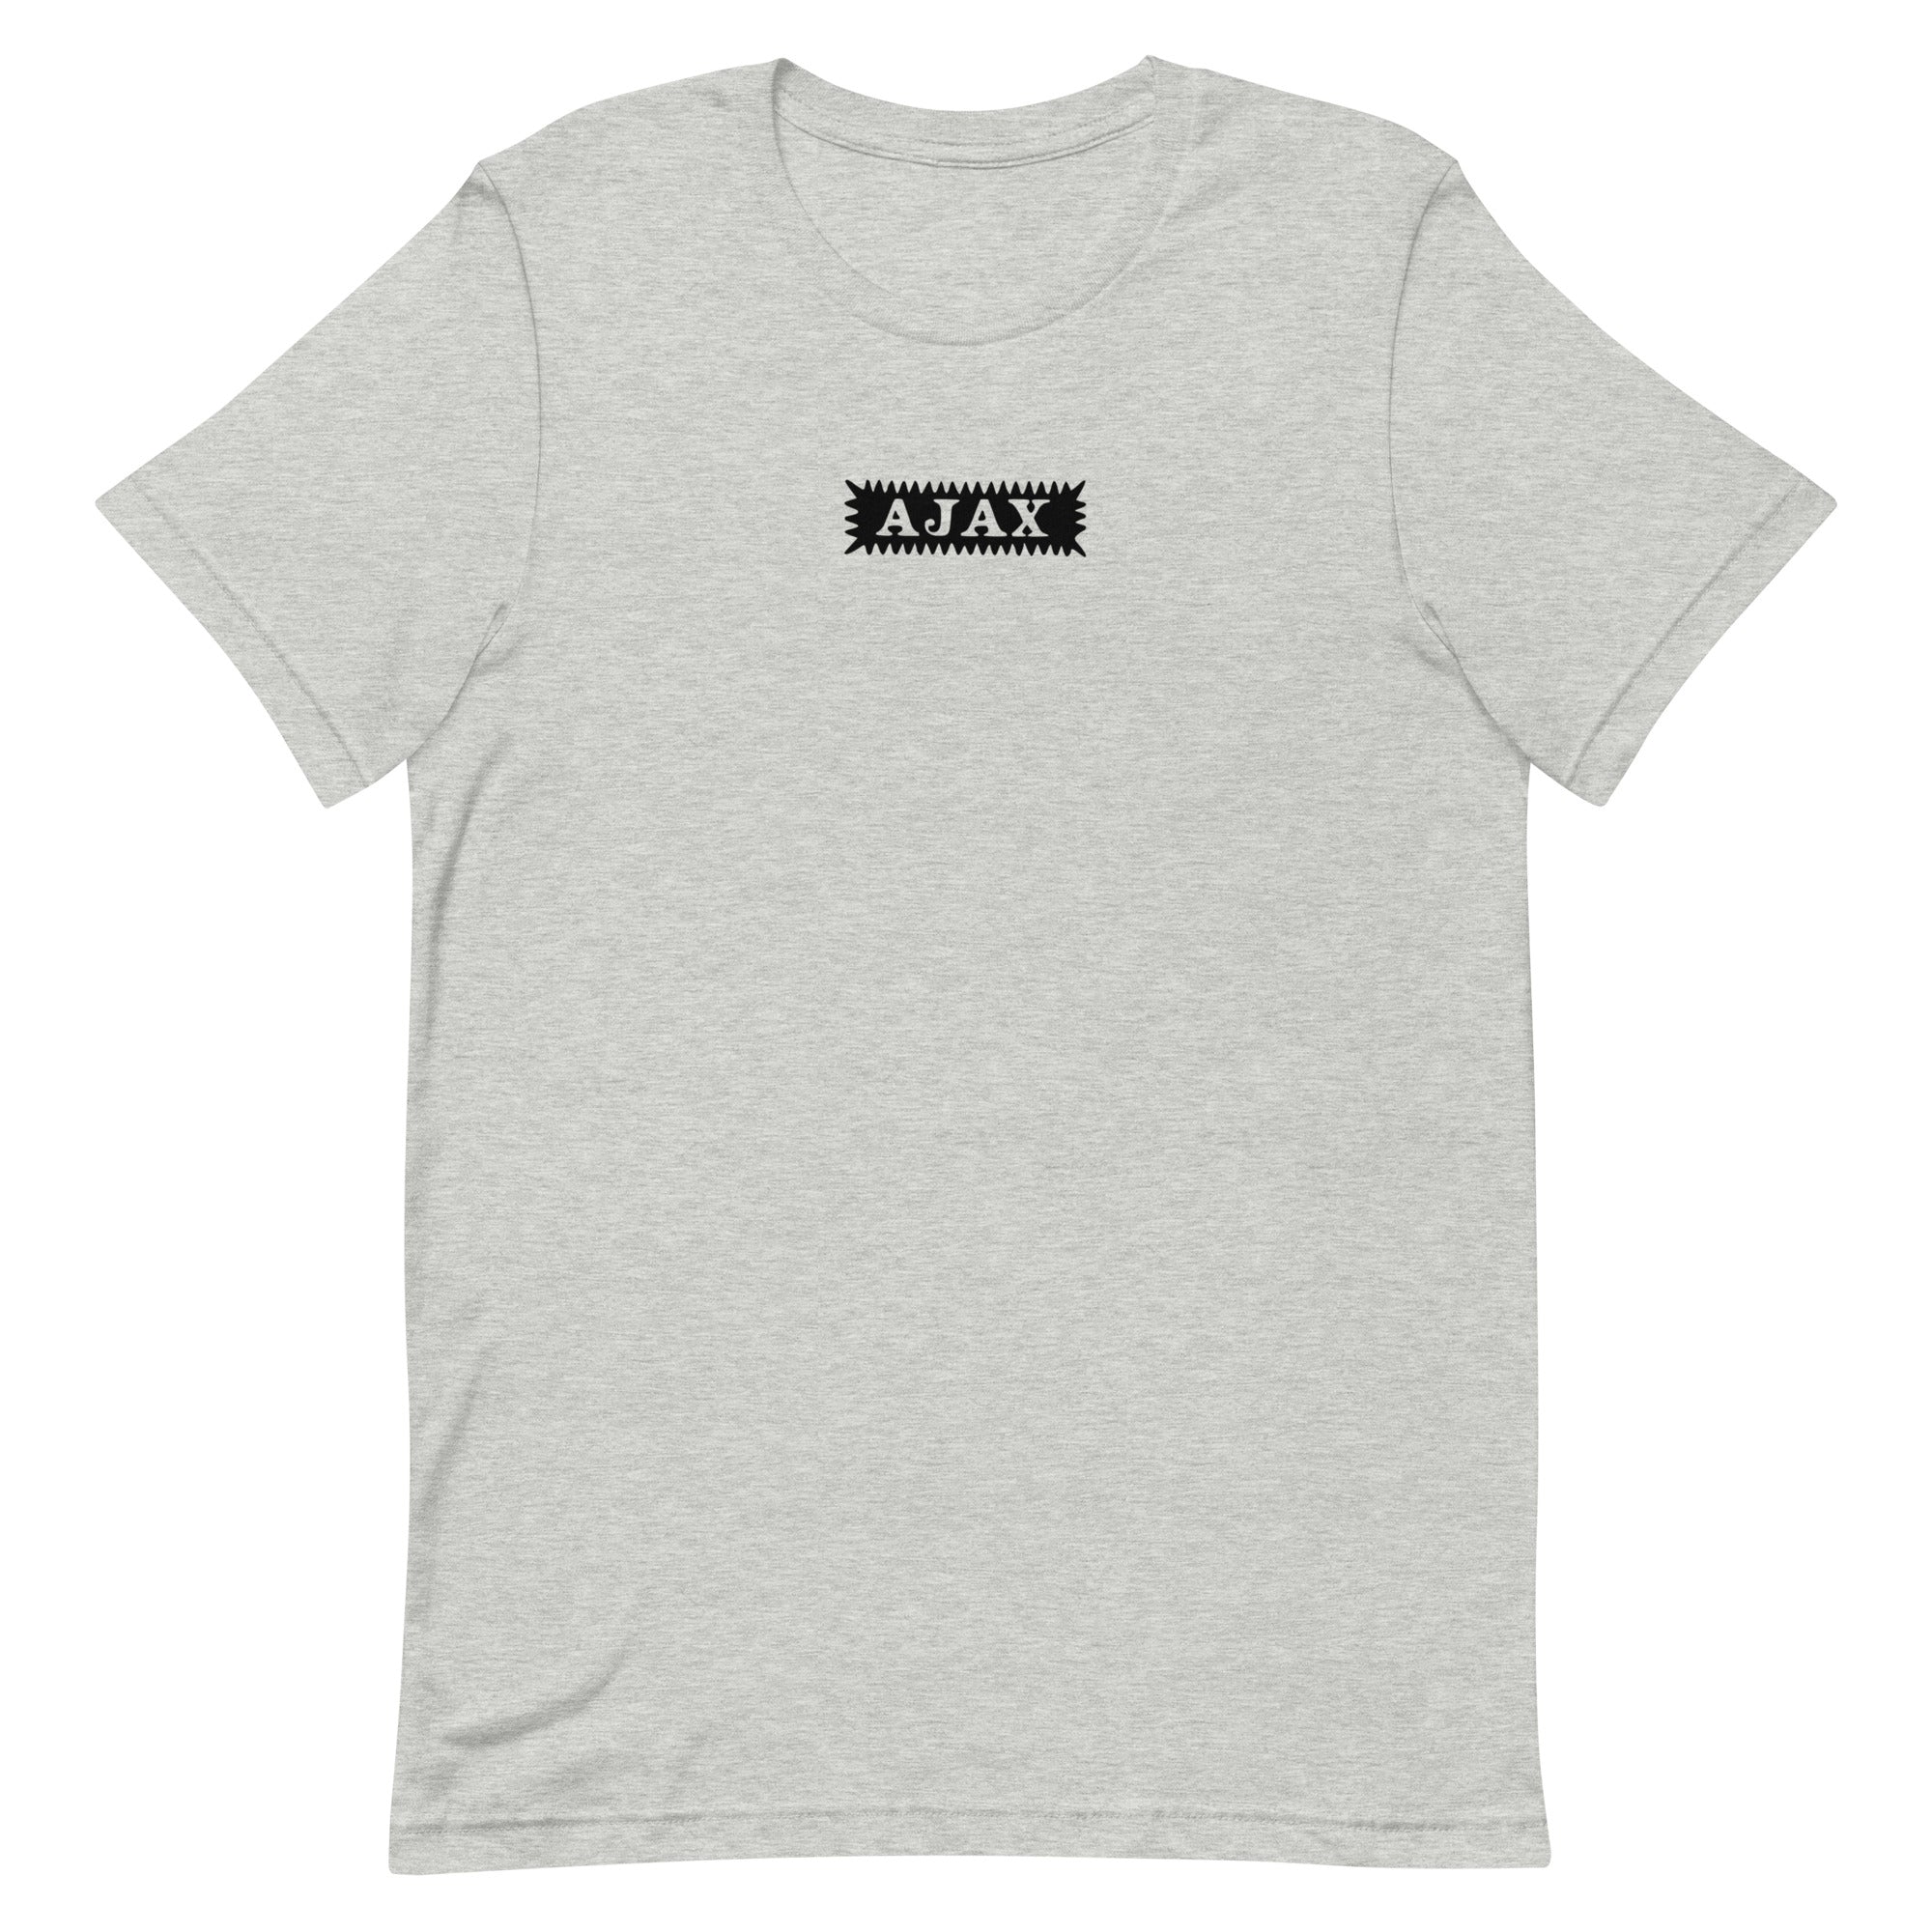 Unisex t-shirt - Ajax